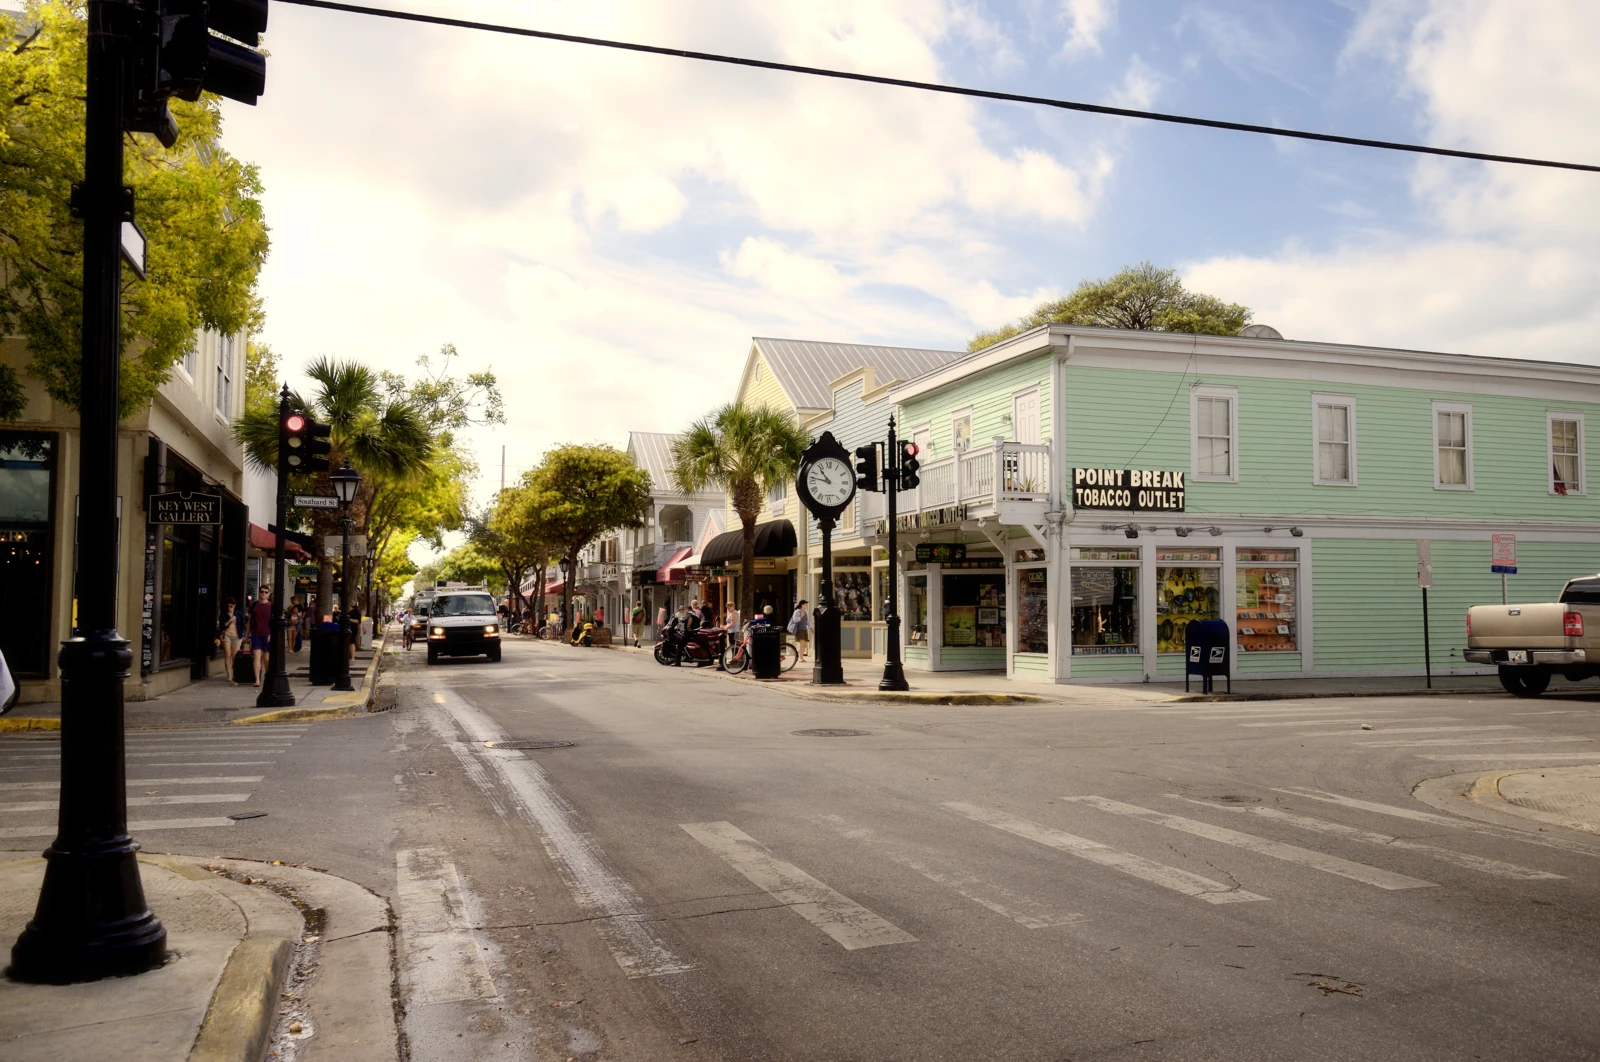 Duval Crawl - Duval Street Key West, Sightseeing Tours, Duval Crawl